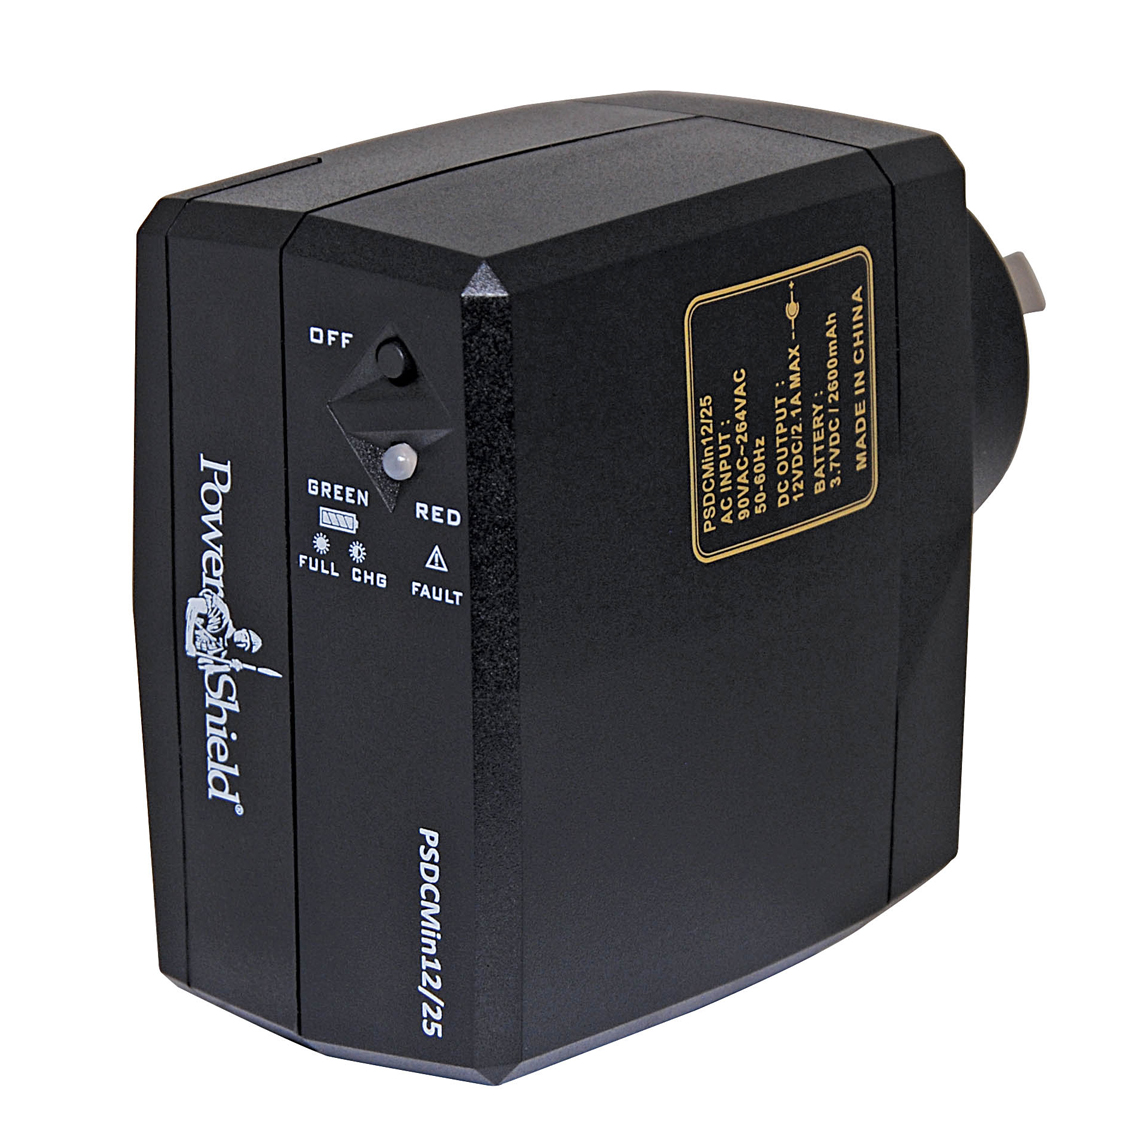 PowerShield DC Mini UPS - PowerShield Power Protection Solutions